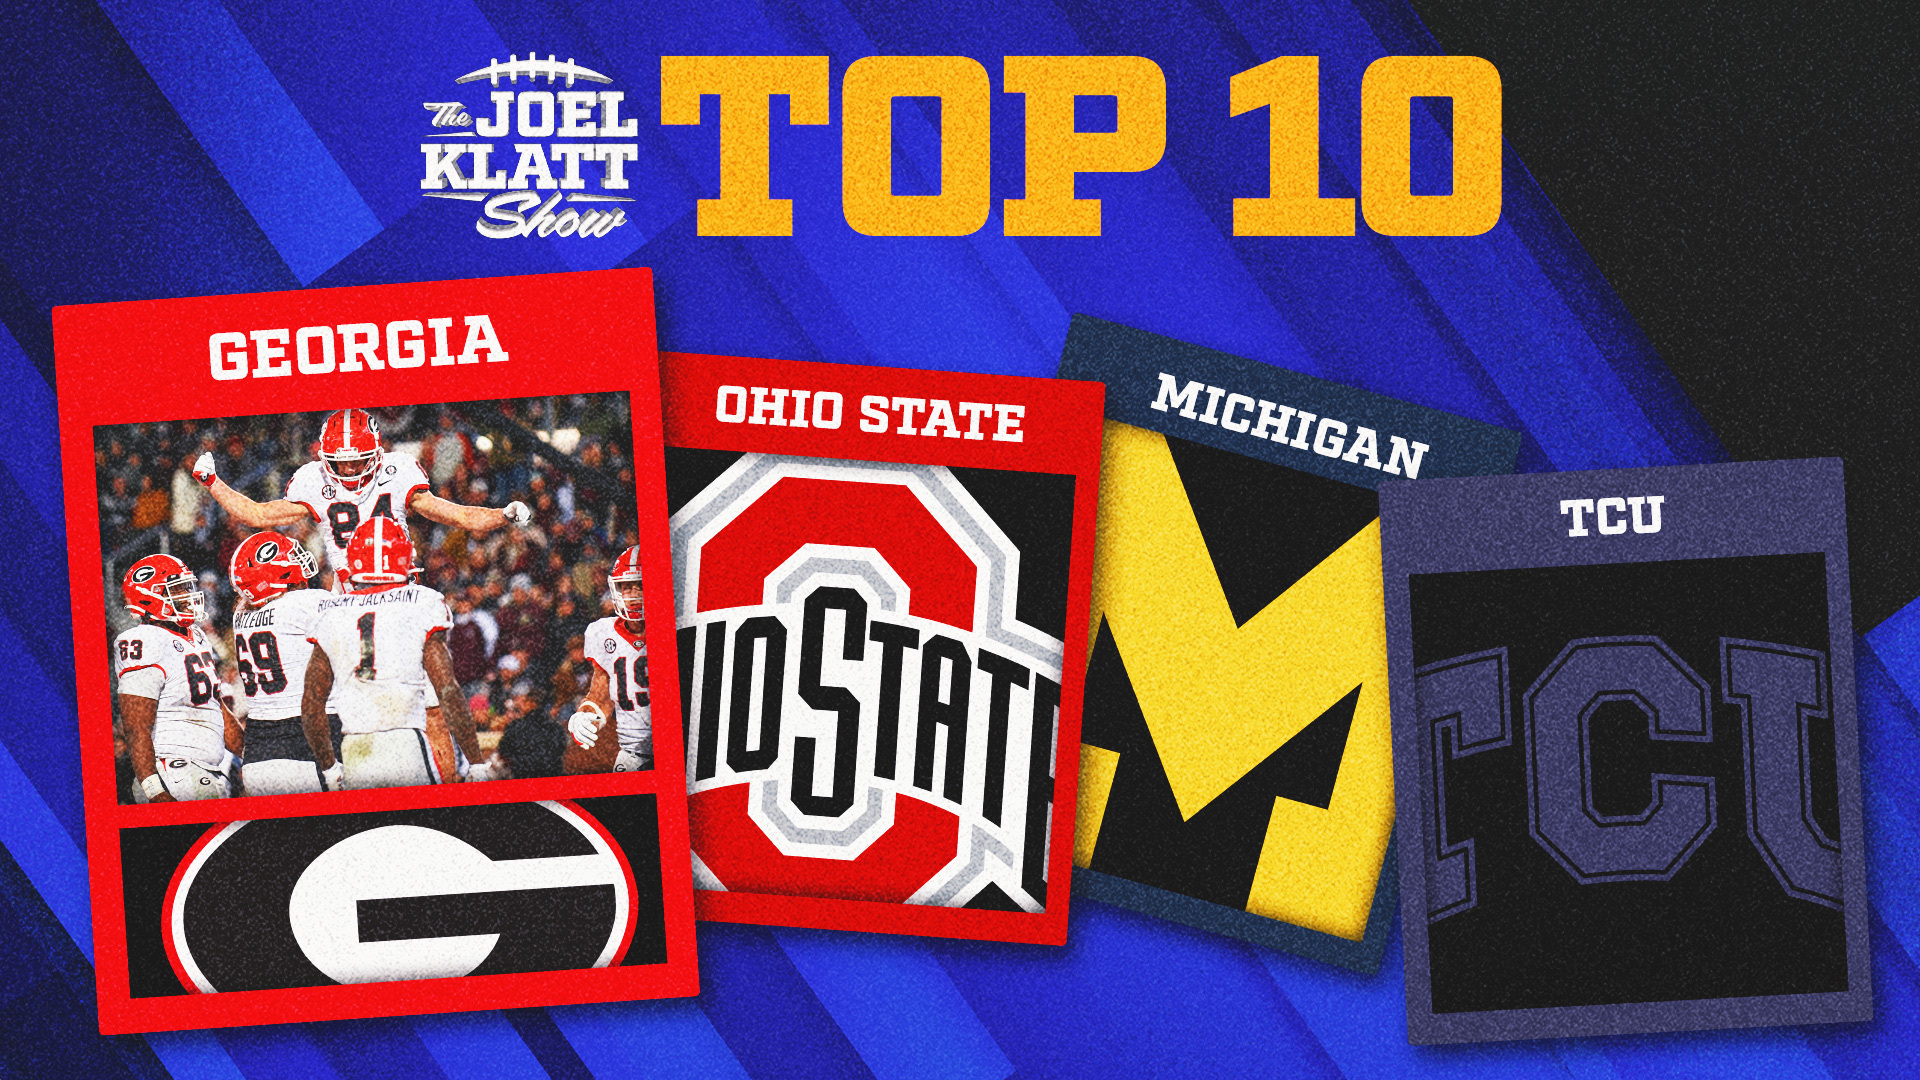 USC, Penn State move into Joel Klatt's Top 10 Rankings